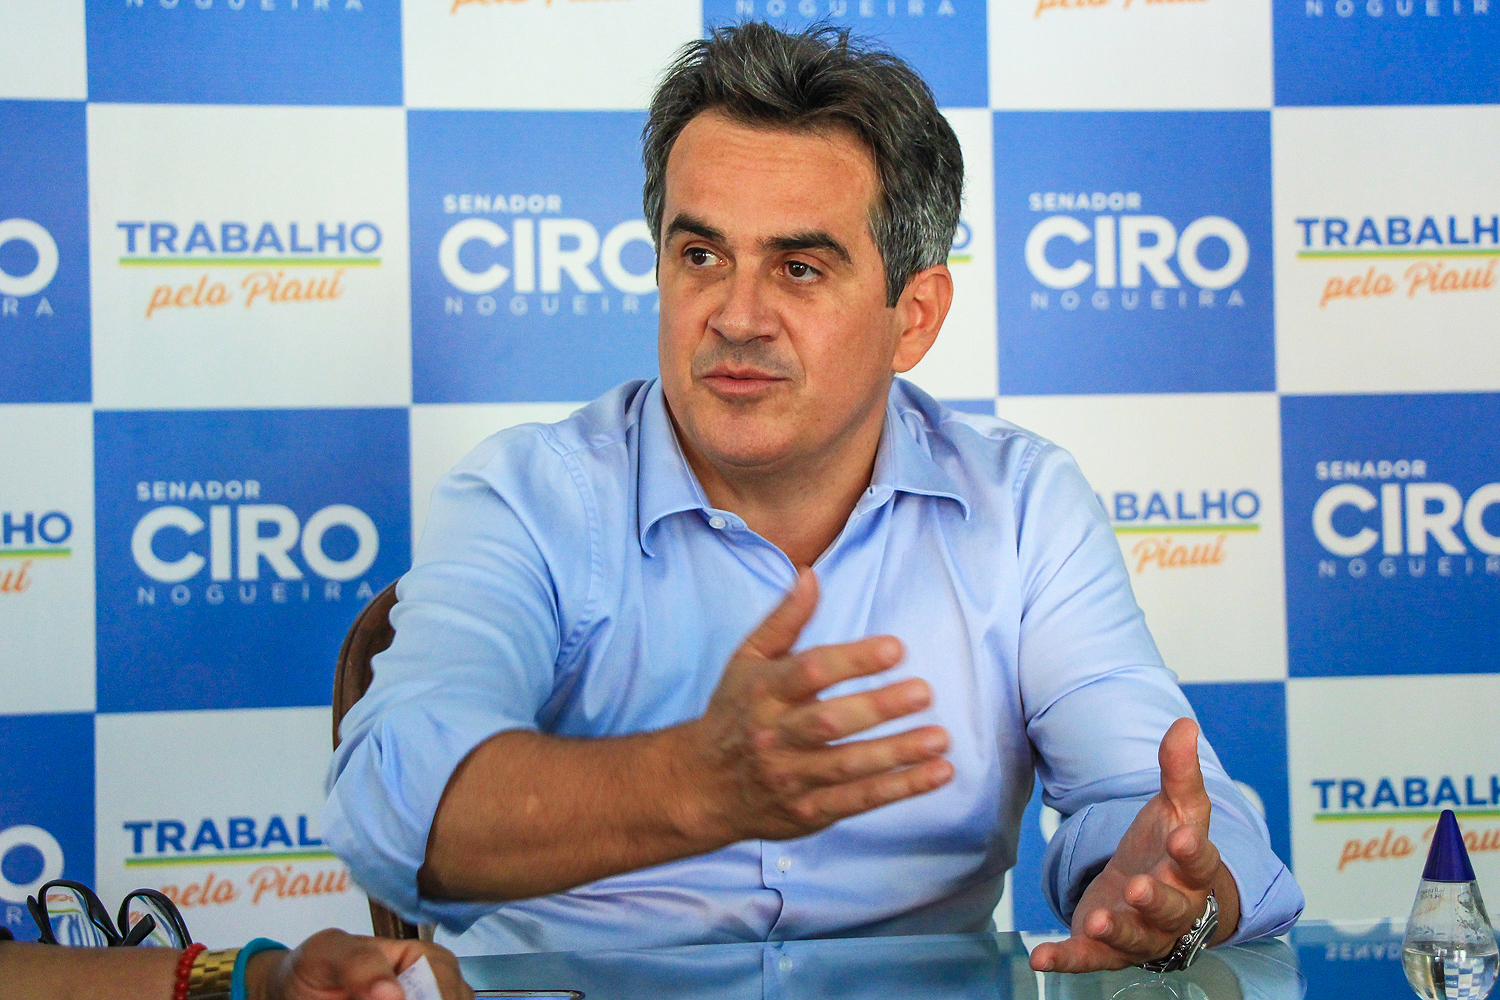 Entrevista com o Senador Ciro Nogueira 